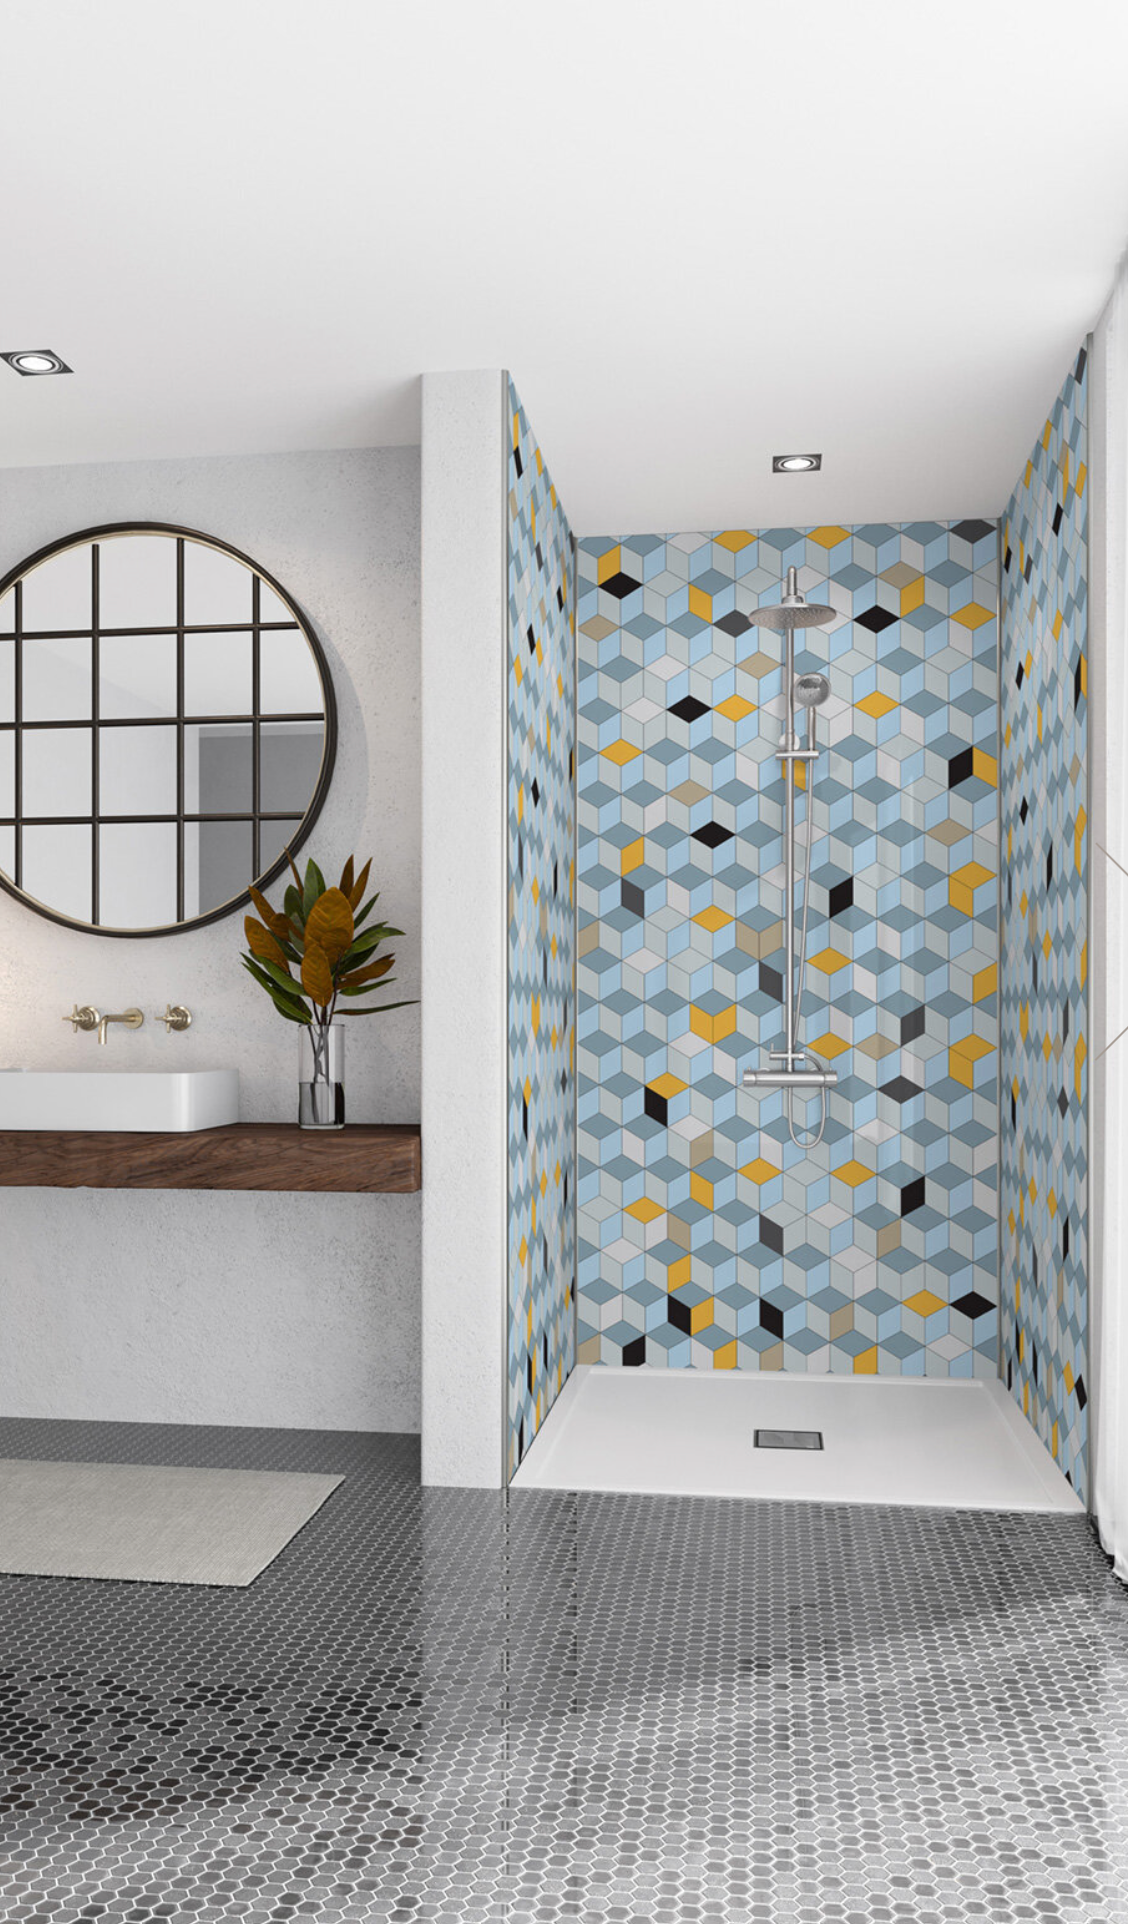 Wetwall Acrylic Patterns Shower Panels - Cubics/Cubes